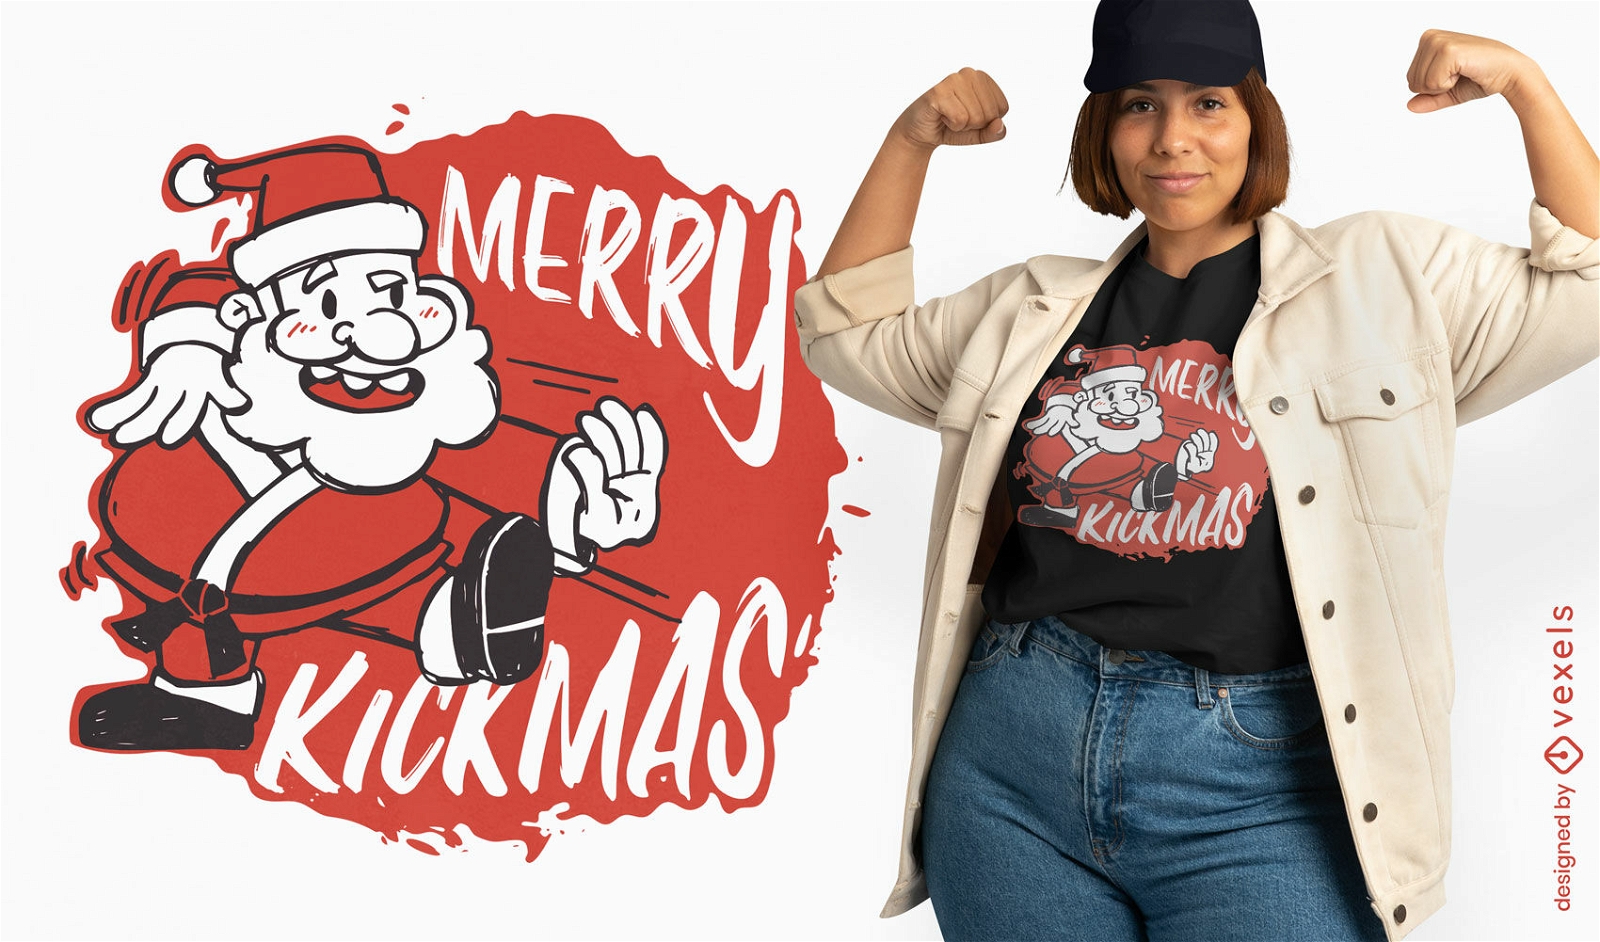 Santa claus karate christmas t-shirt design